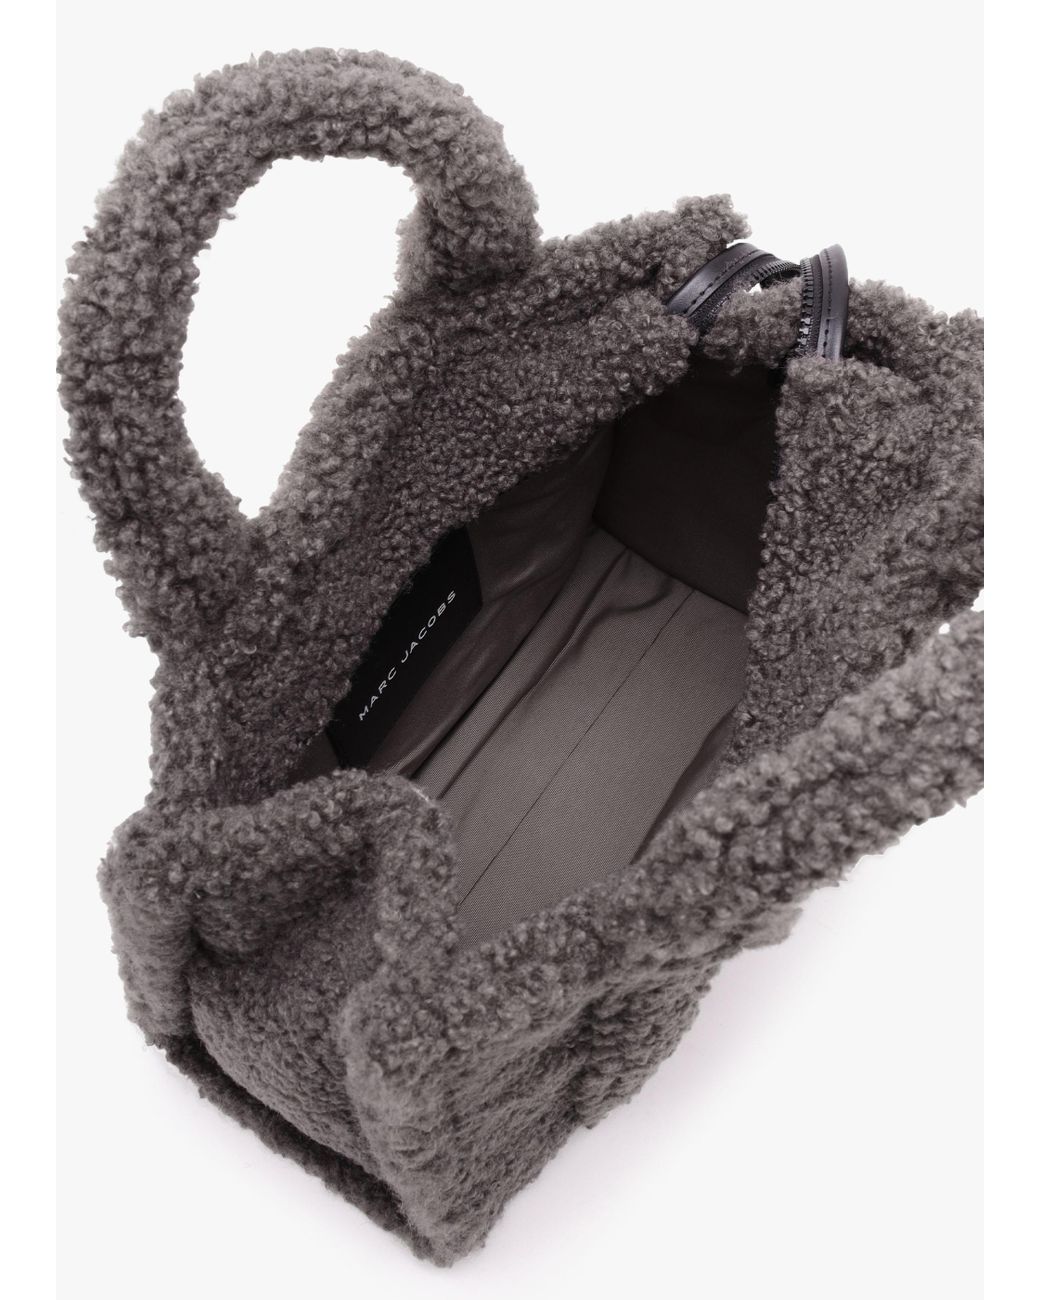 Marc Jacobs The Teddy Medium Grey Tote Bag in Black